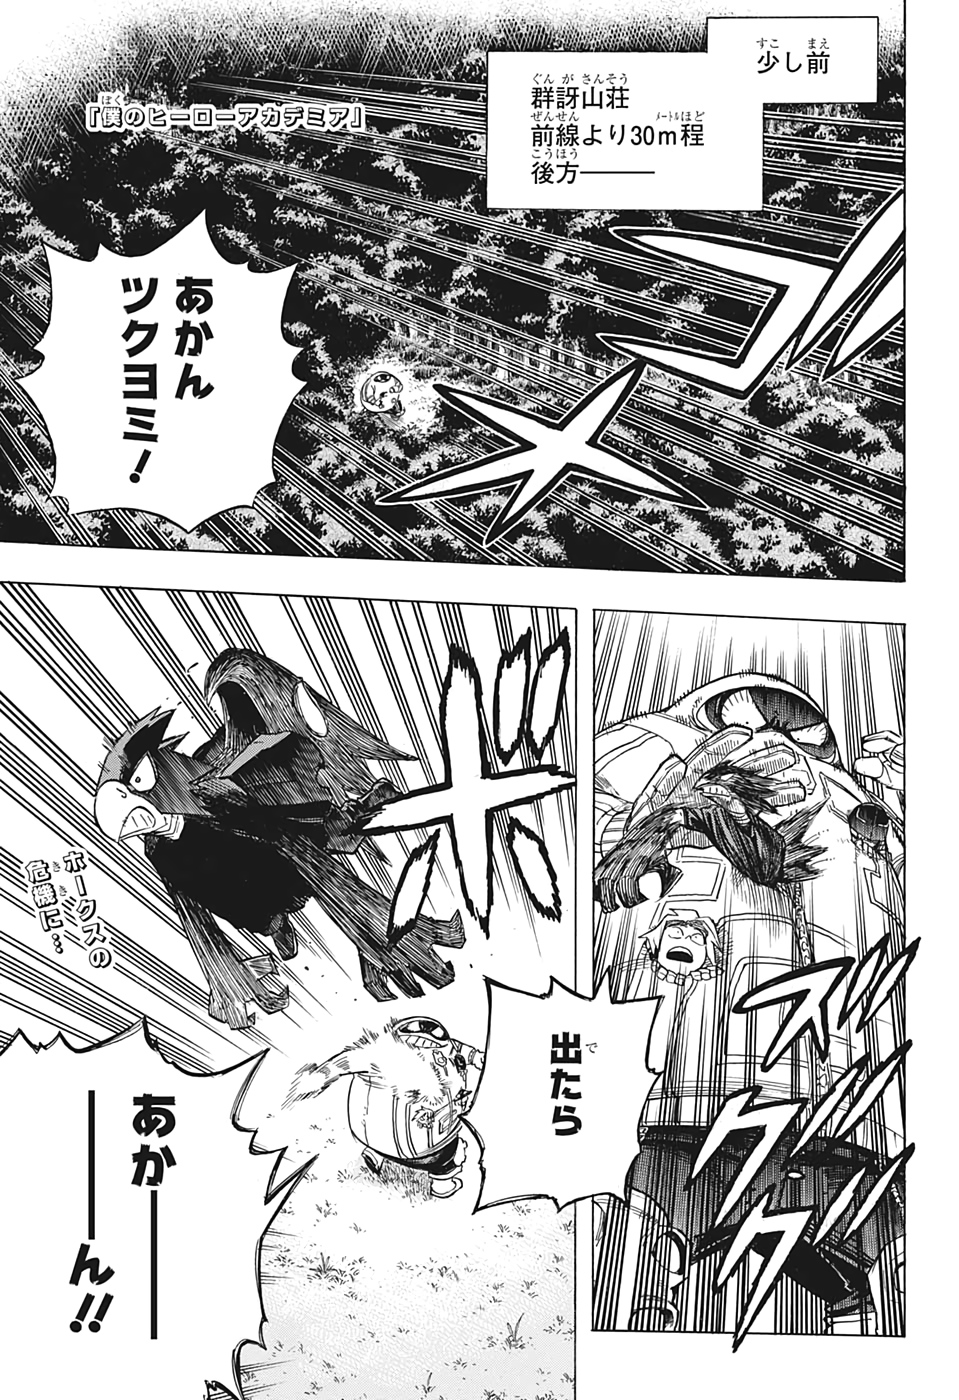 Boku no Hero Academia - Chapter 271 - Page 1